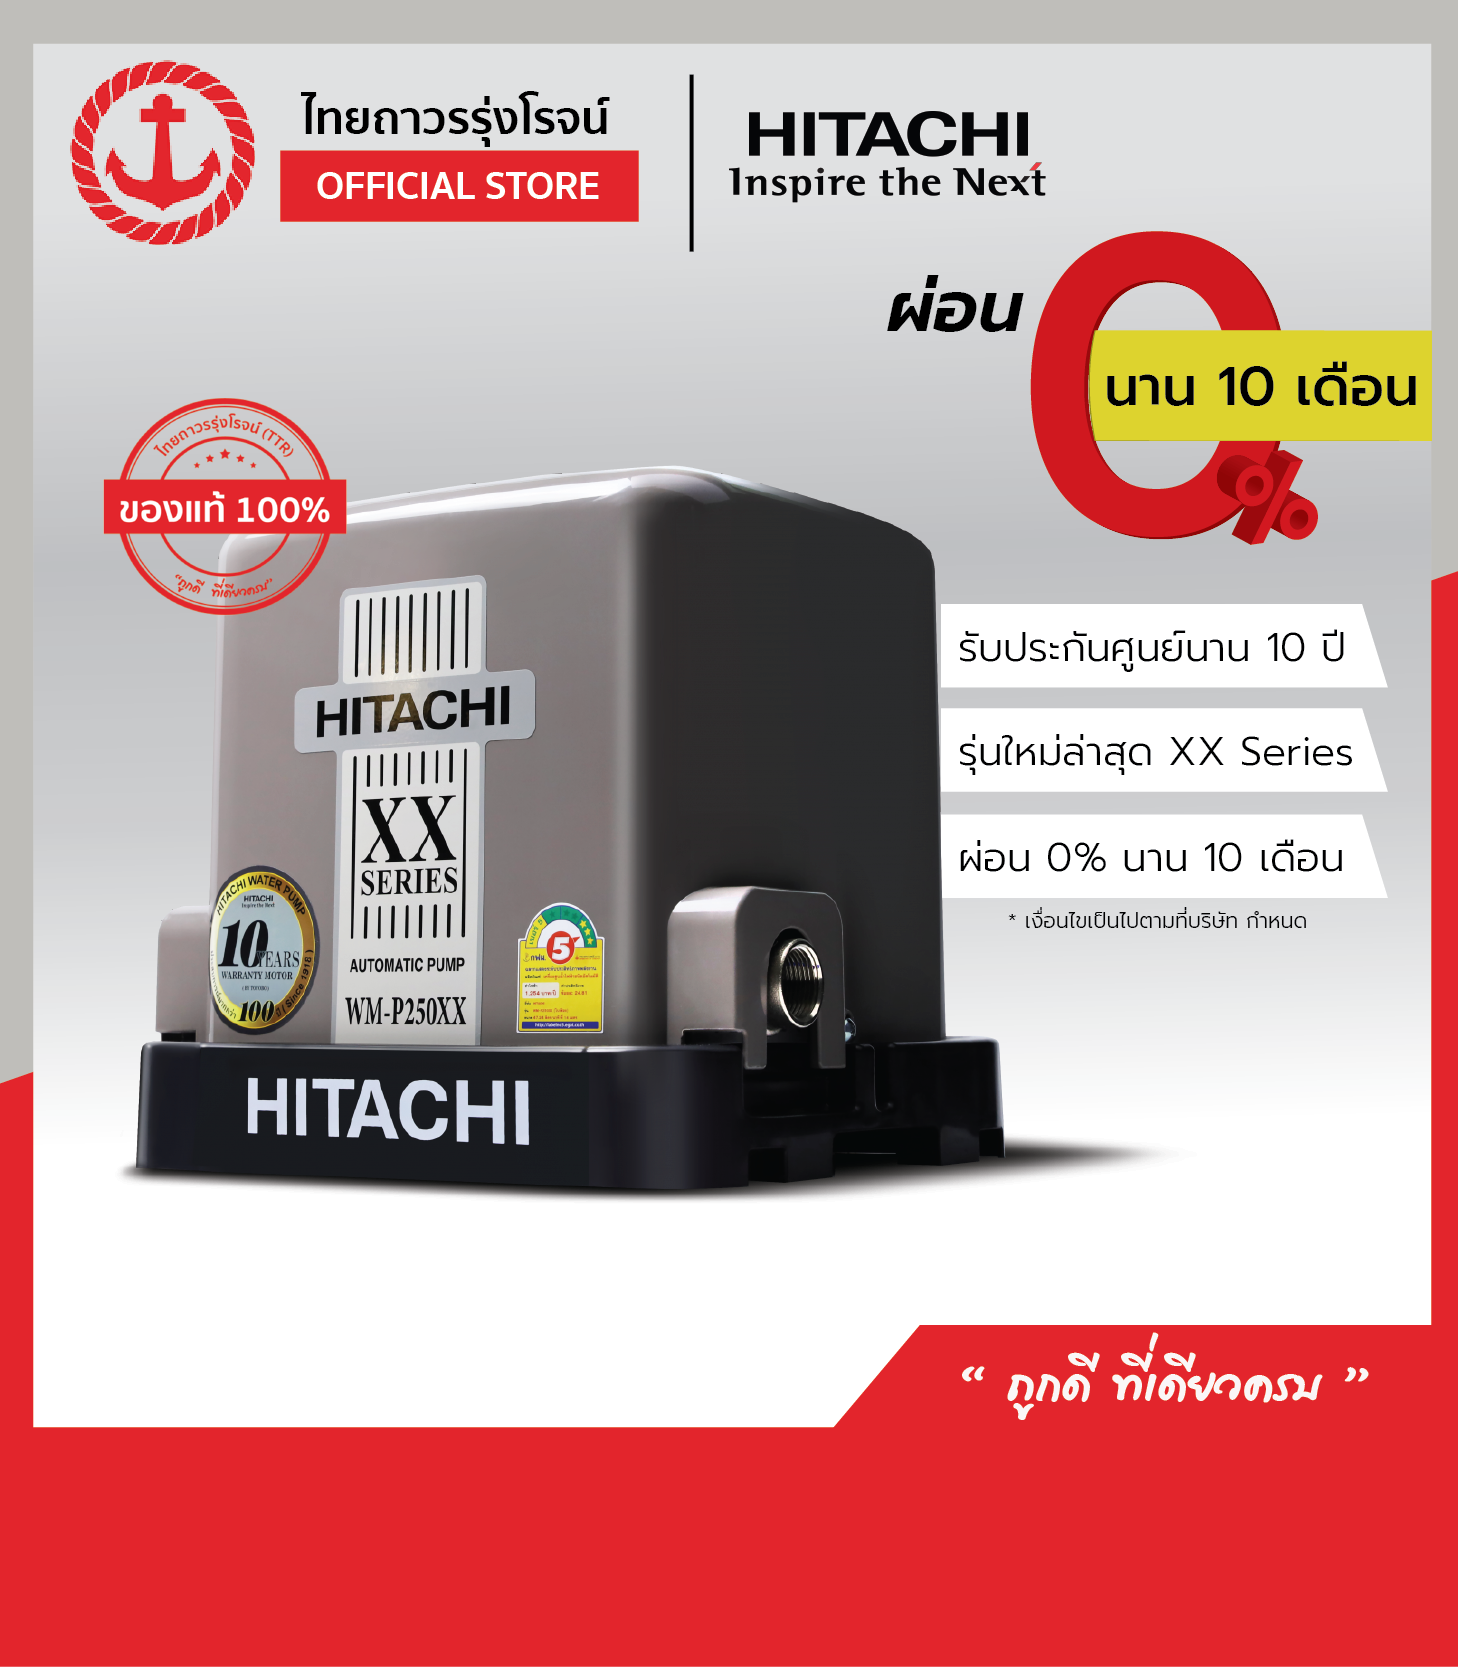 HITACHI ปั้มน้ำ อัตโนมัติ รุ่นใหม่ WMP250XX ของแท้ 1000% รับประกันมอเตอร์ศูนย์ นาน 10ปี